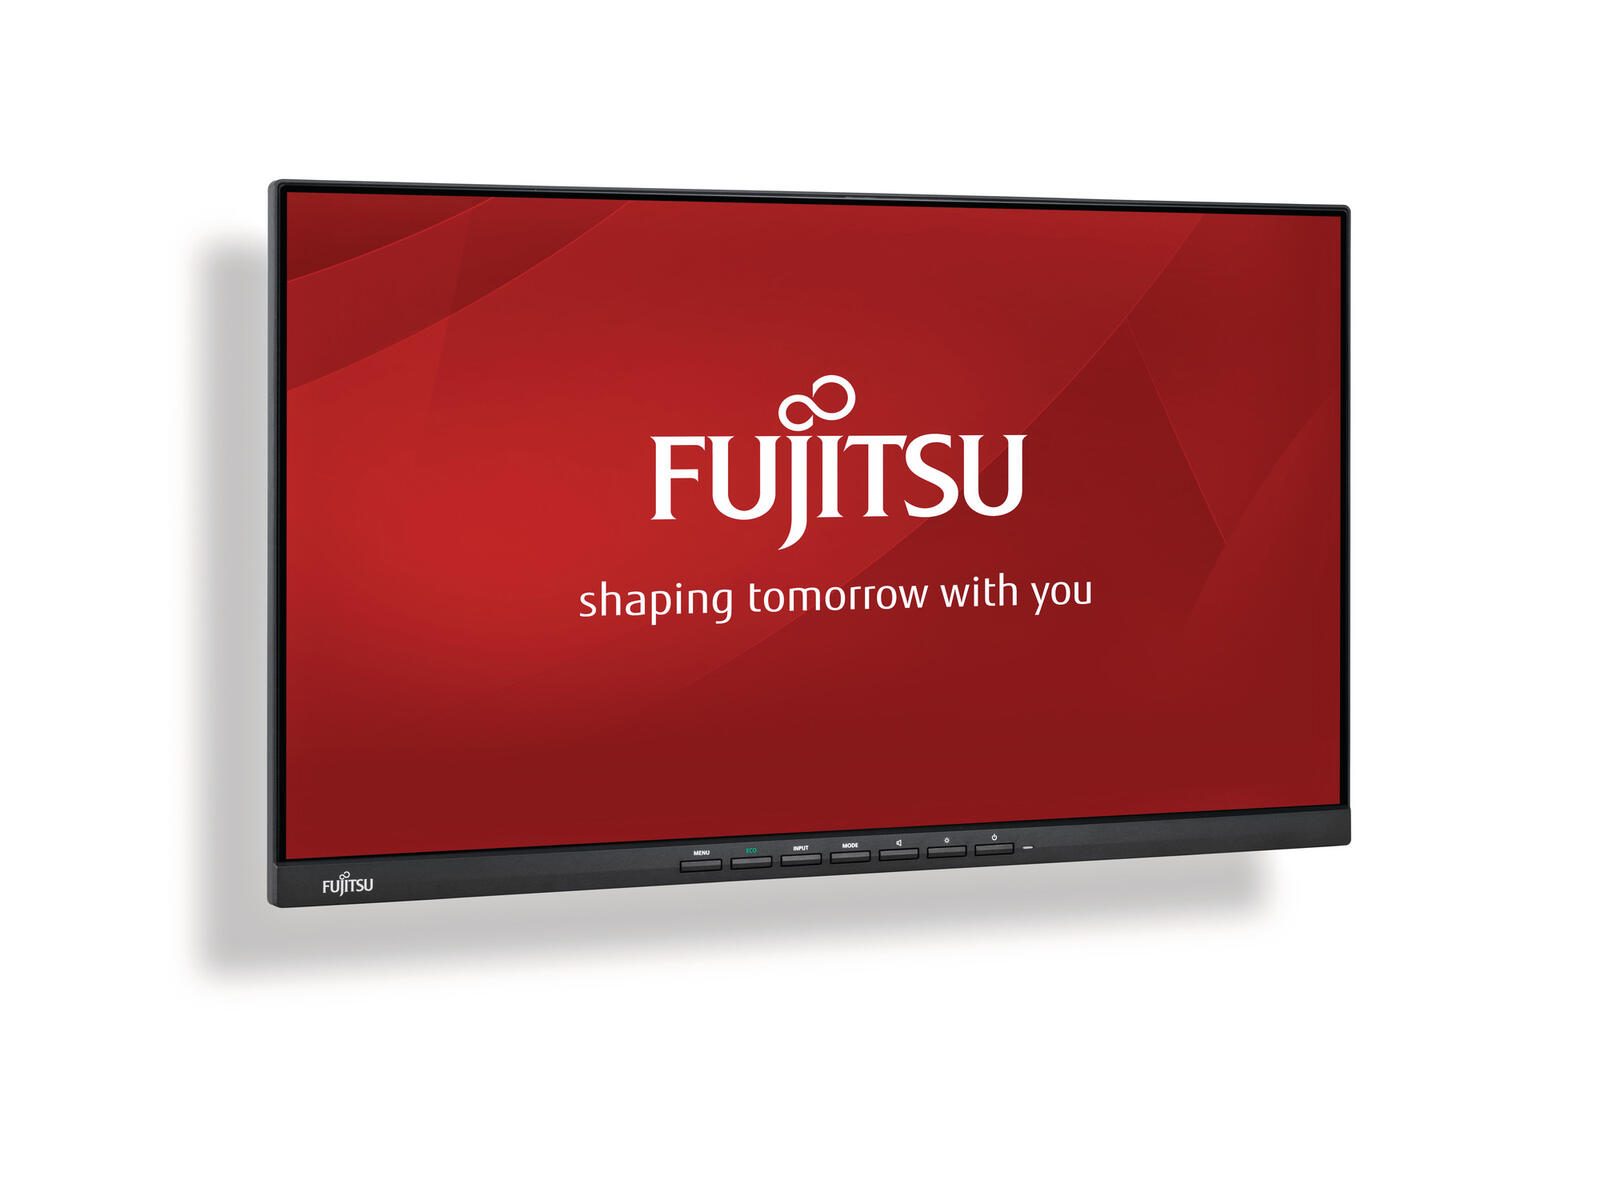 Fujitsu E24-9 Touch EU (EEK: A) monitors